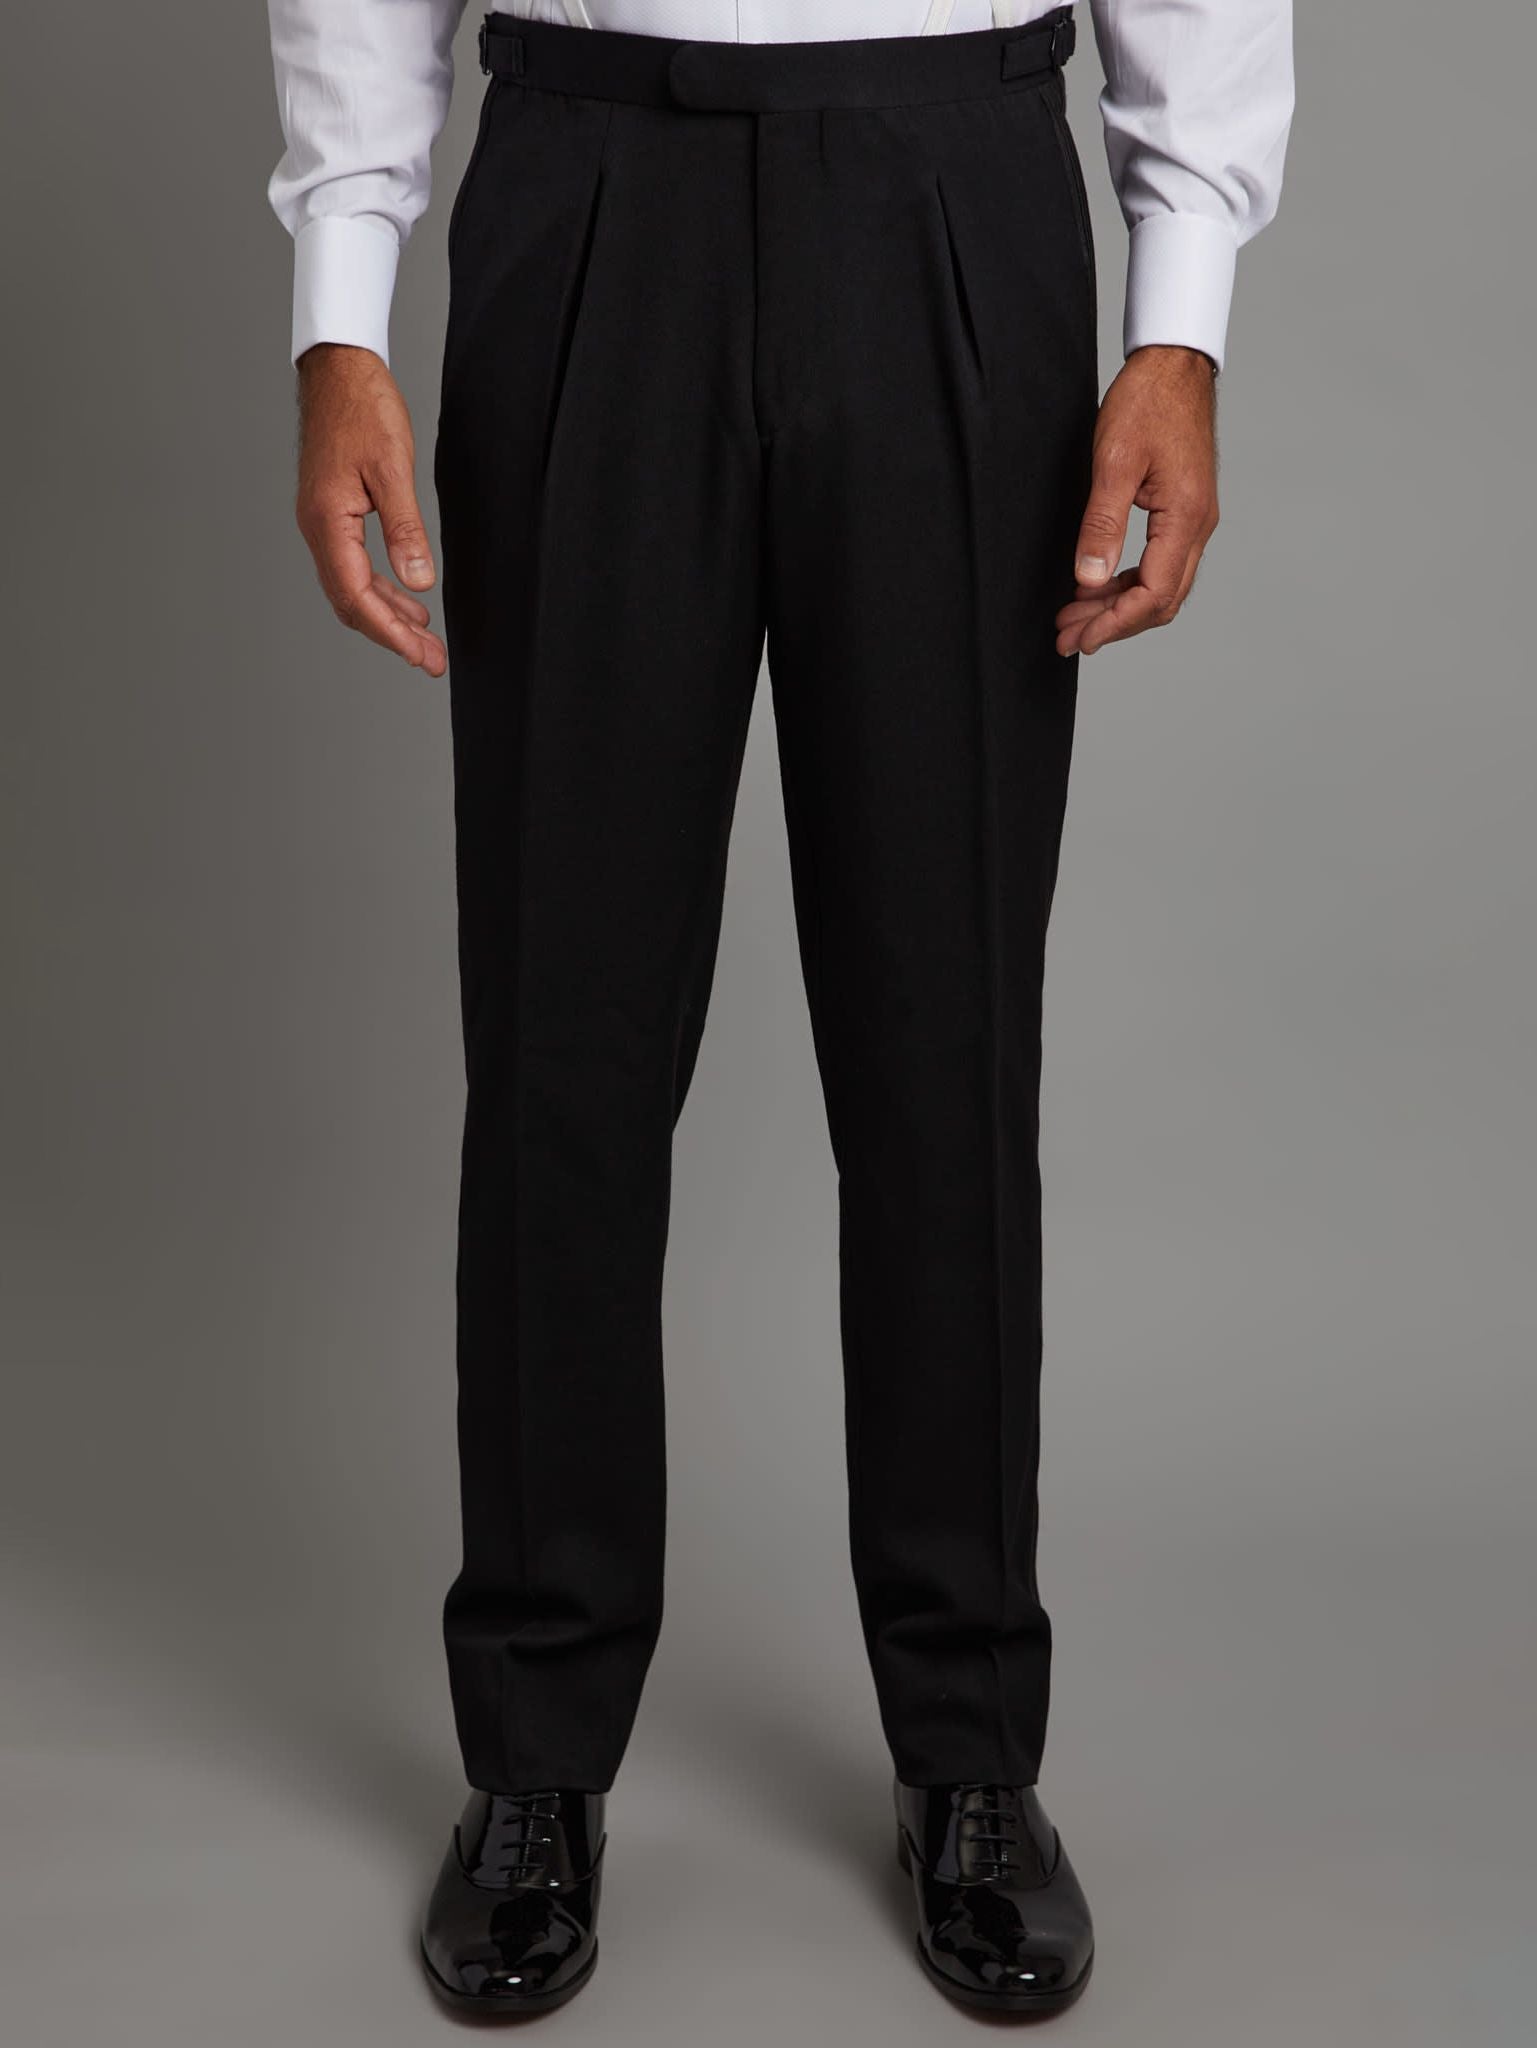 Trousers For Evening Wear Best Sale | bellvalefarms.com